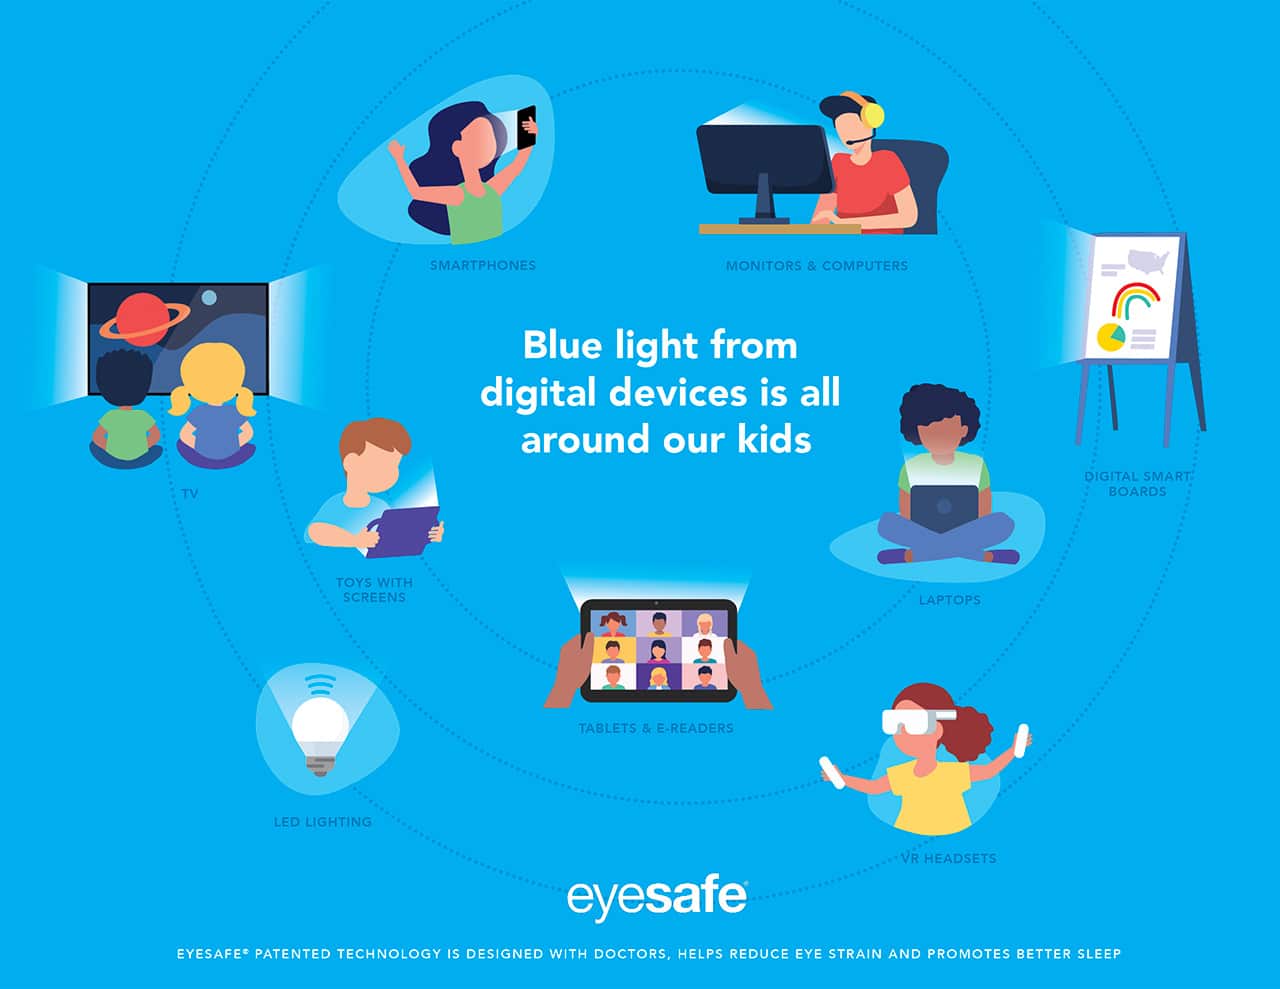 Blue Light is all around our kids. Eyesafe helps reduce eye strain, promotes better sleep.